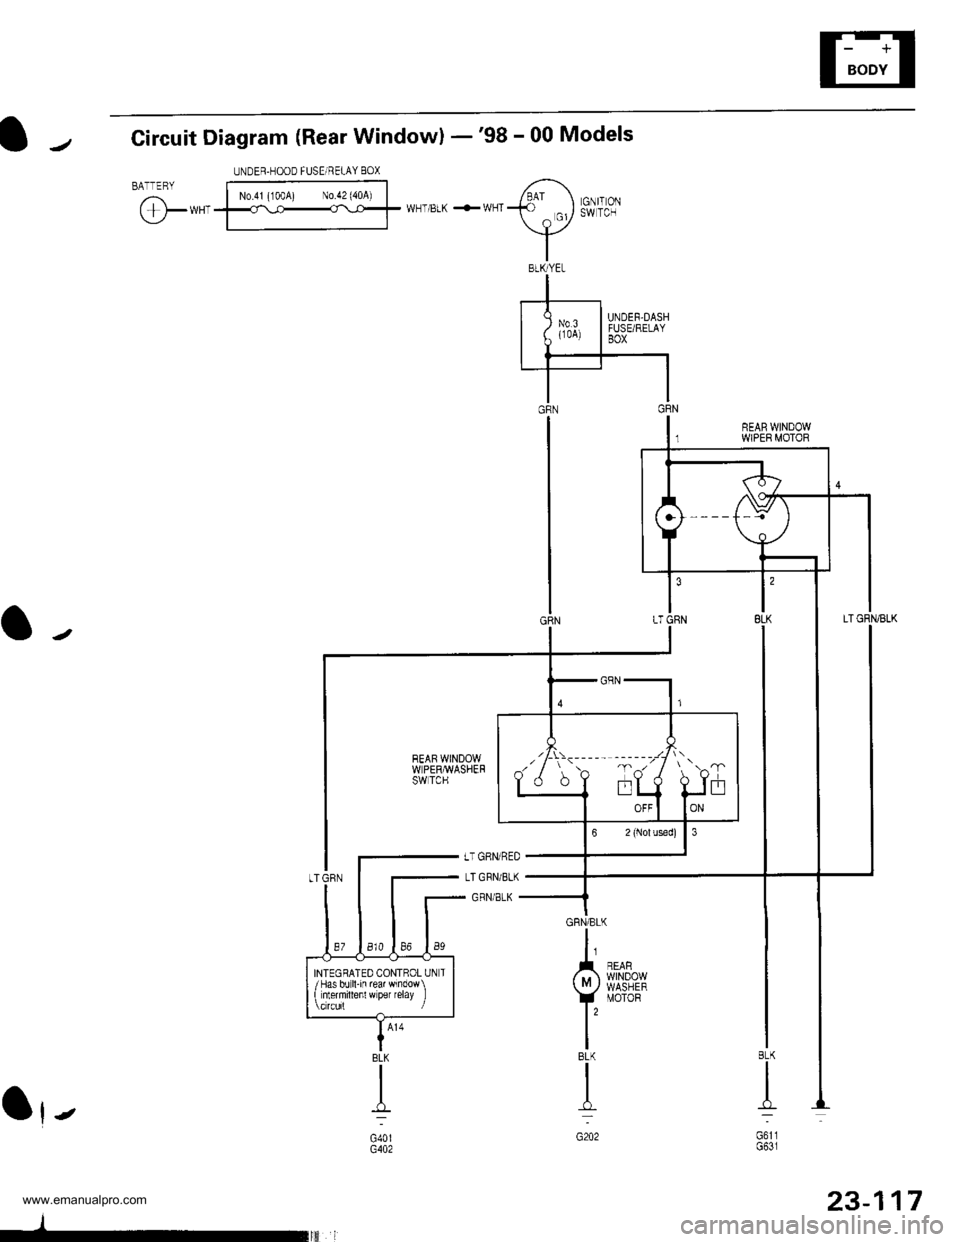 HONDA CR-V 2000 RD1-RD3 / 1.G Service Manual 
Circuit Diagram (Rear Windowl -98 - 00 Models
BATTERYUNDER.HOOD FUSEi RELAY 80X
N0.41 (100A) N0.42 (40A)
@*,WHT/BLK +WHTGNIT ONSW TCH
REAR WINDOWWPER MOTOR
Ot-
GRN/BLK
I
A n,$s".,,,
vil8t8E
IBLK
I